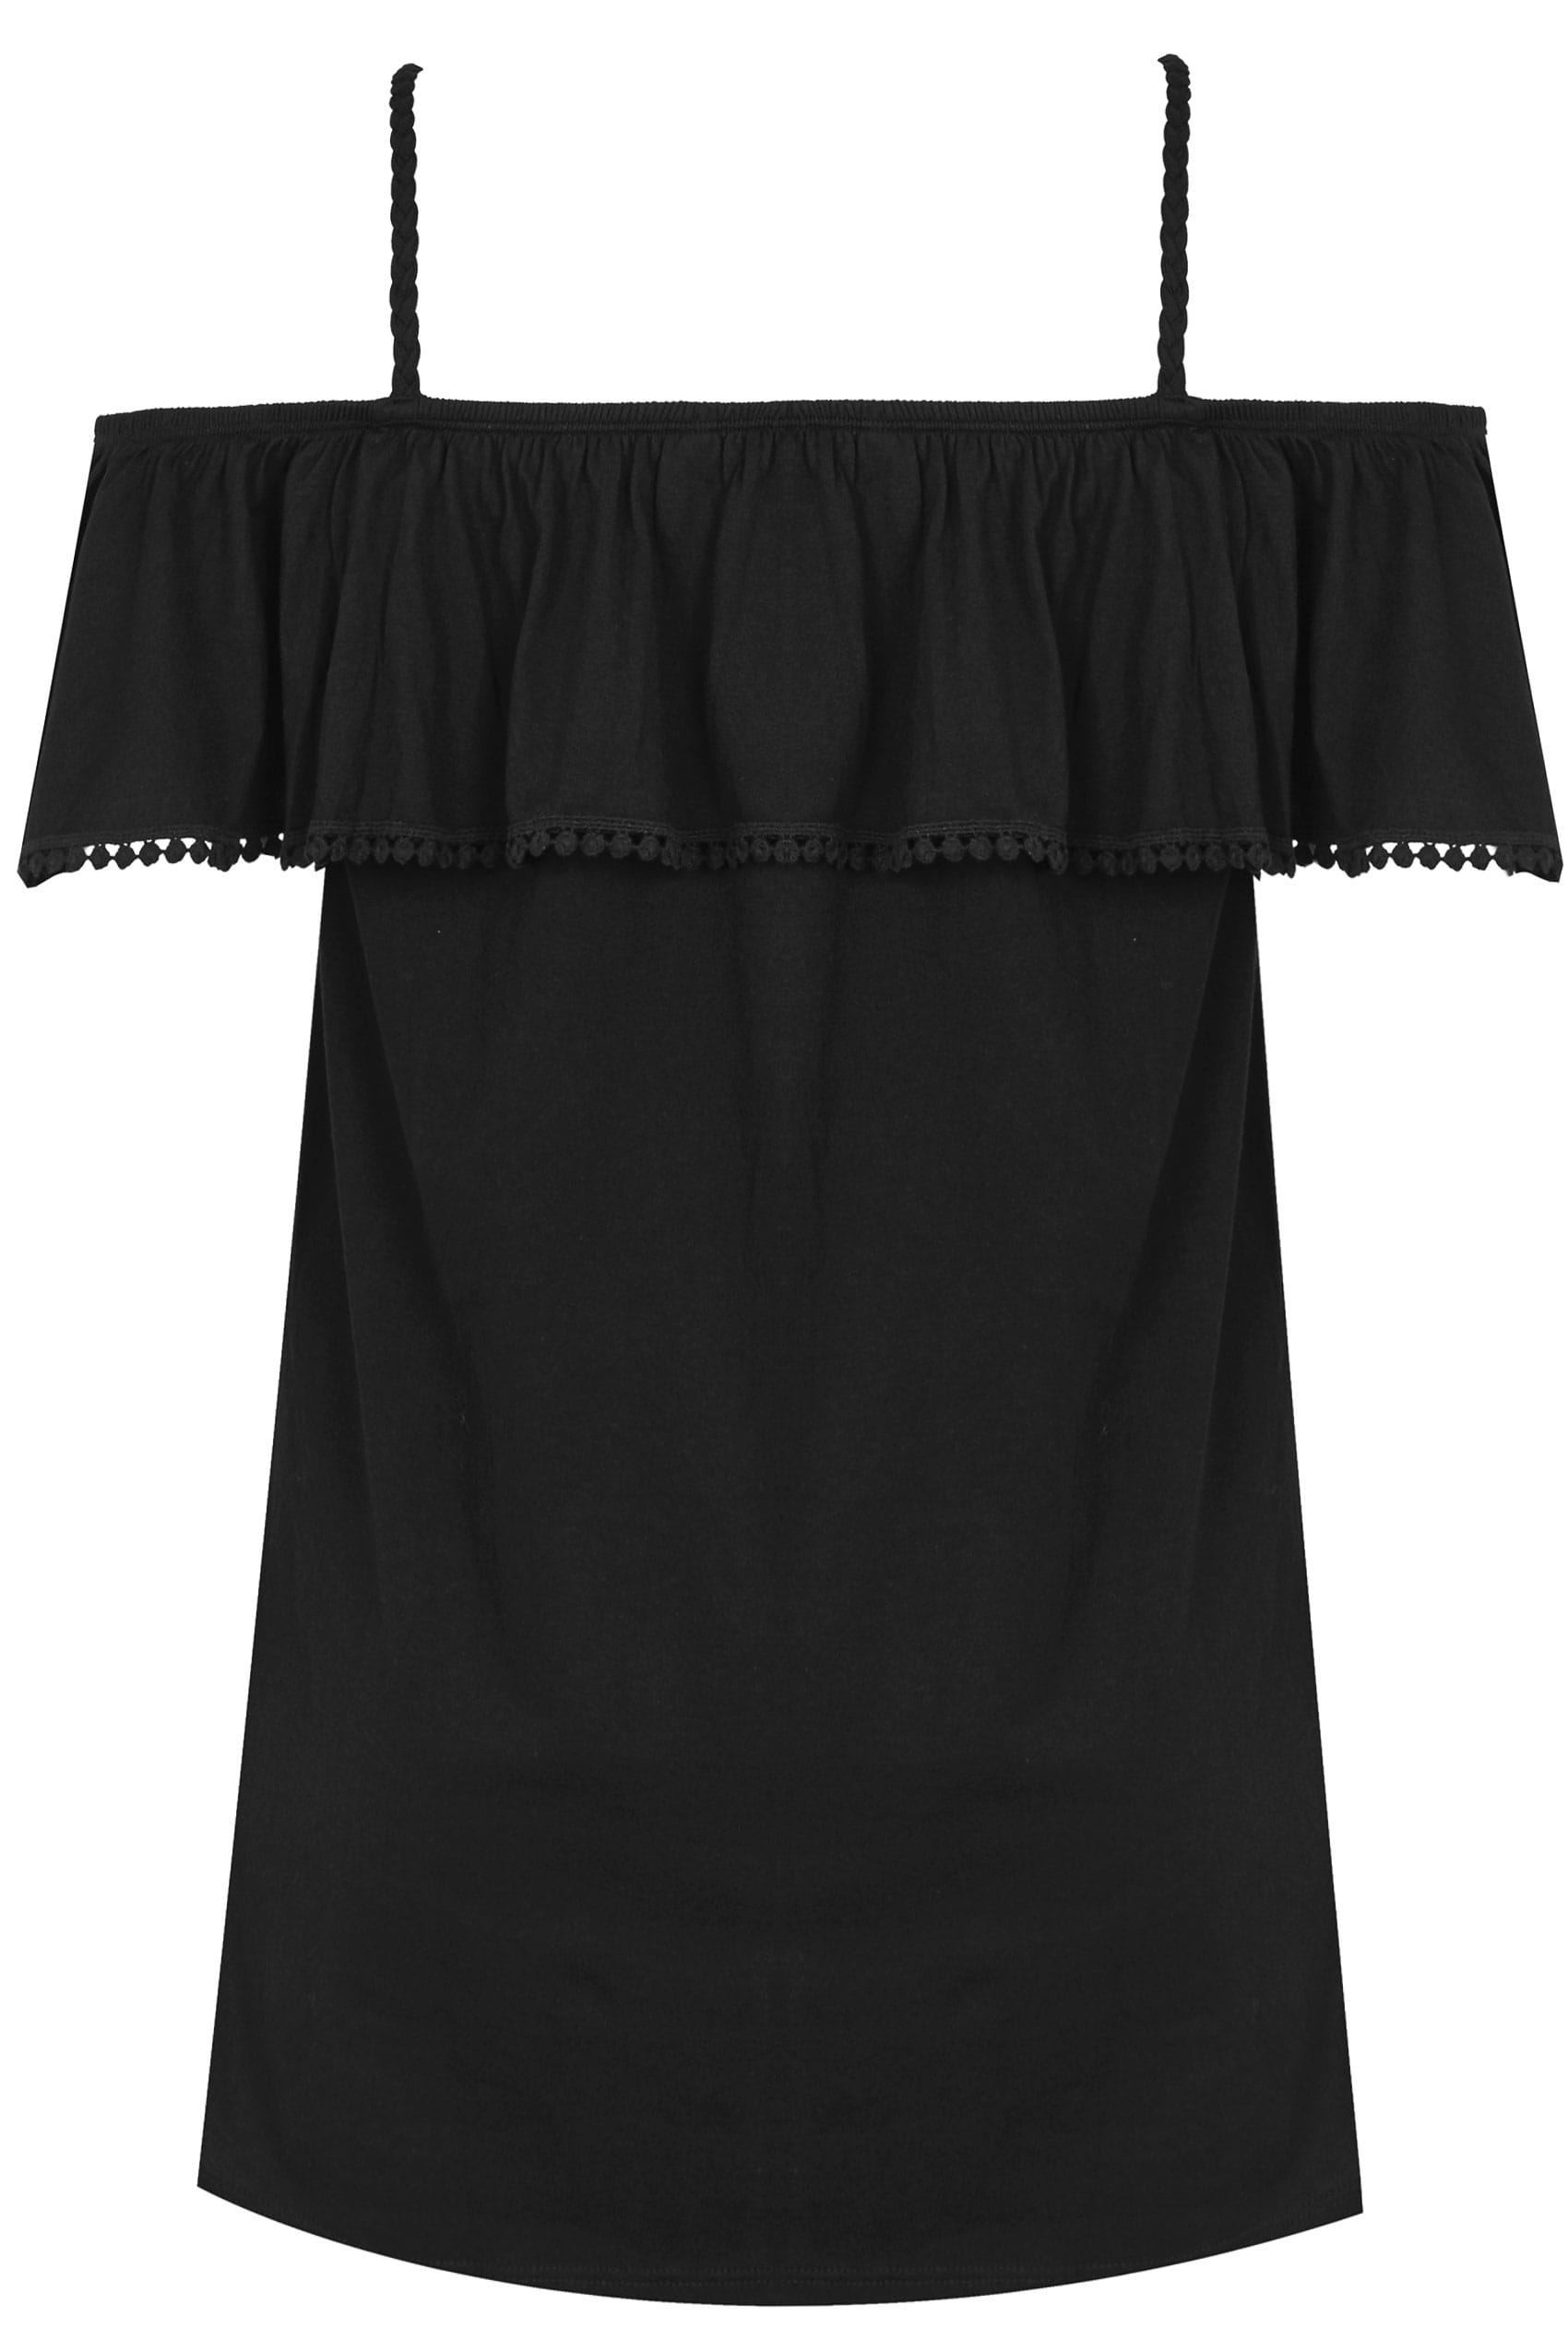 Black Frilled Bardot Top, plus size 16 to 36